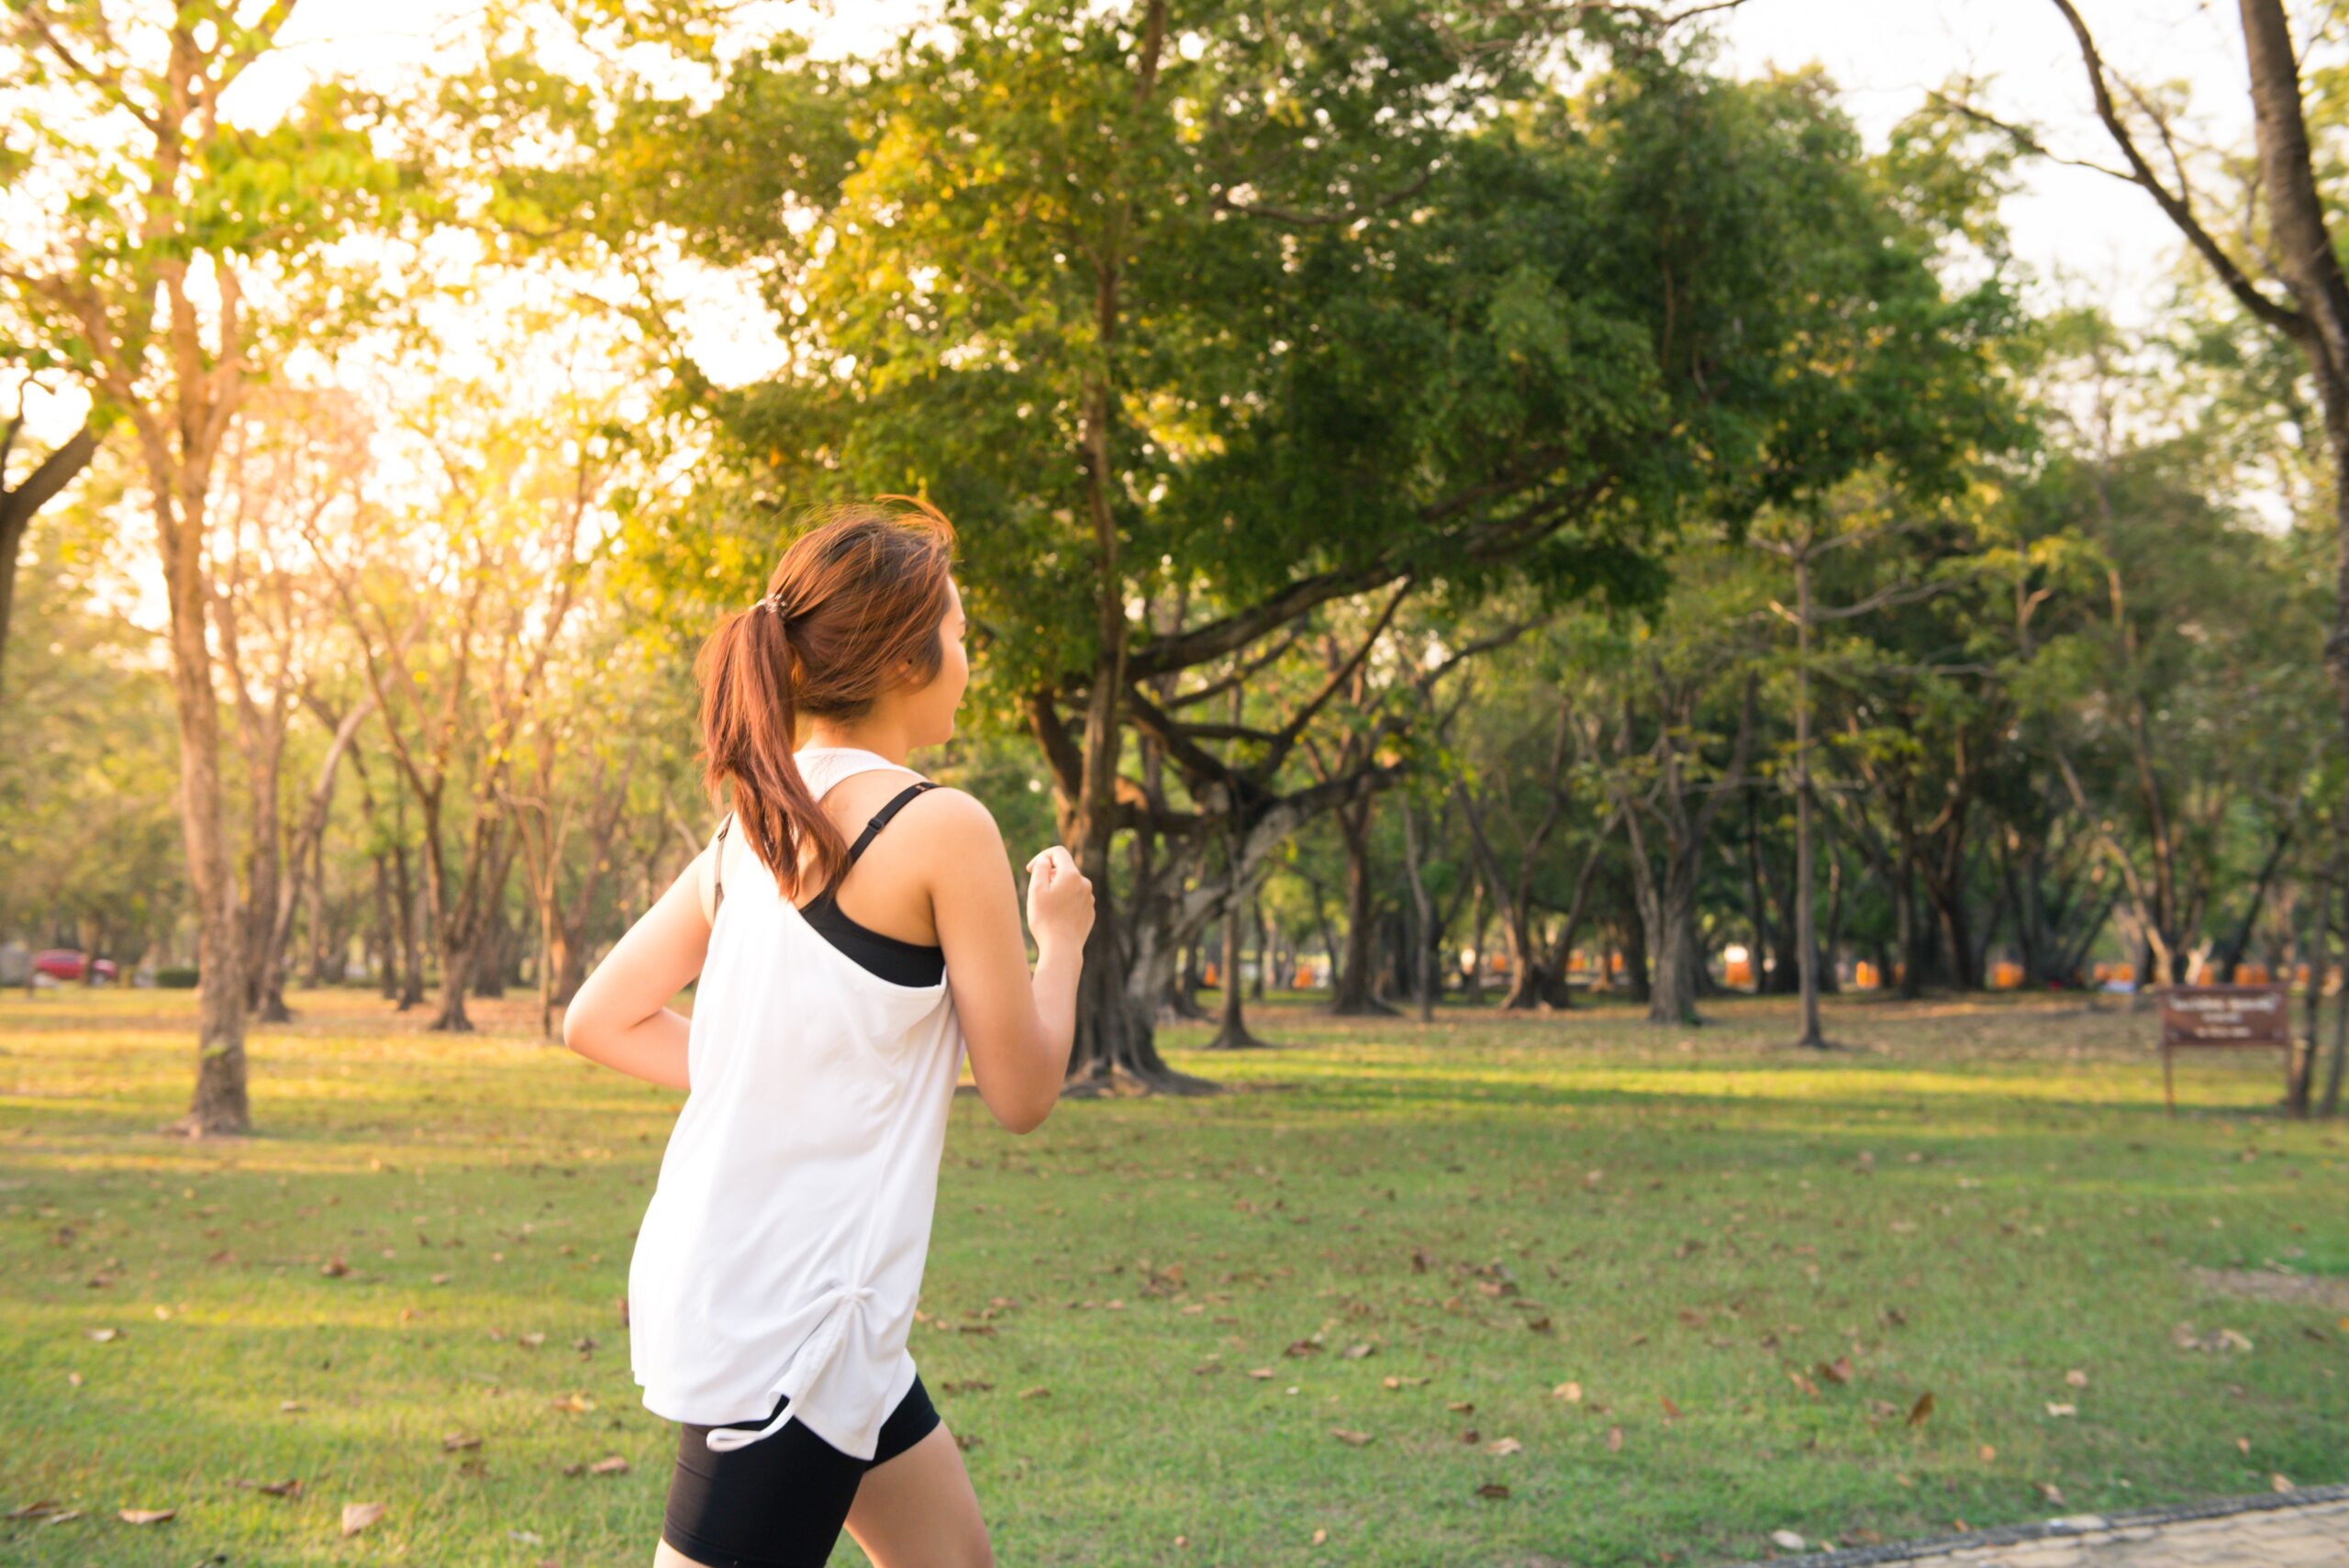 Athlete Running - Cardiovascular Health